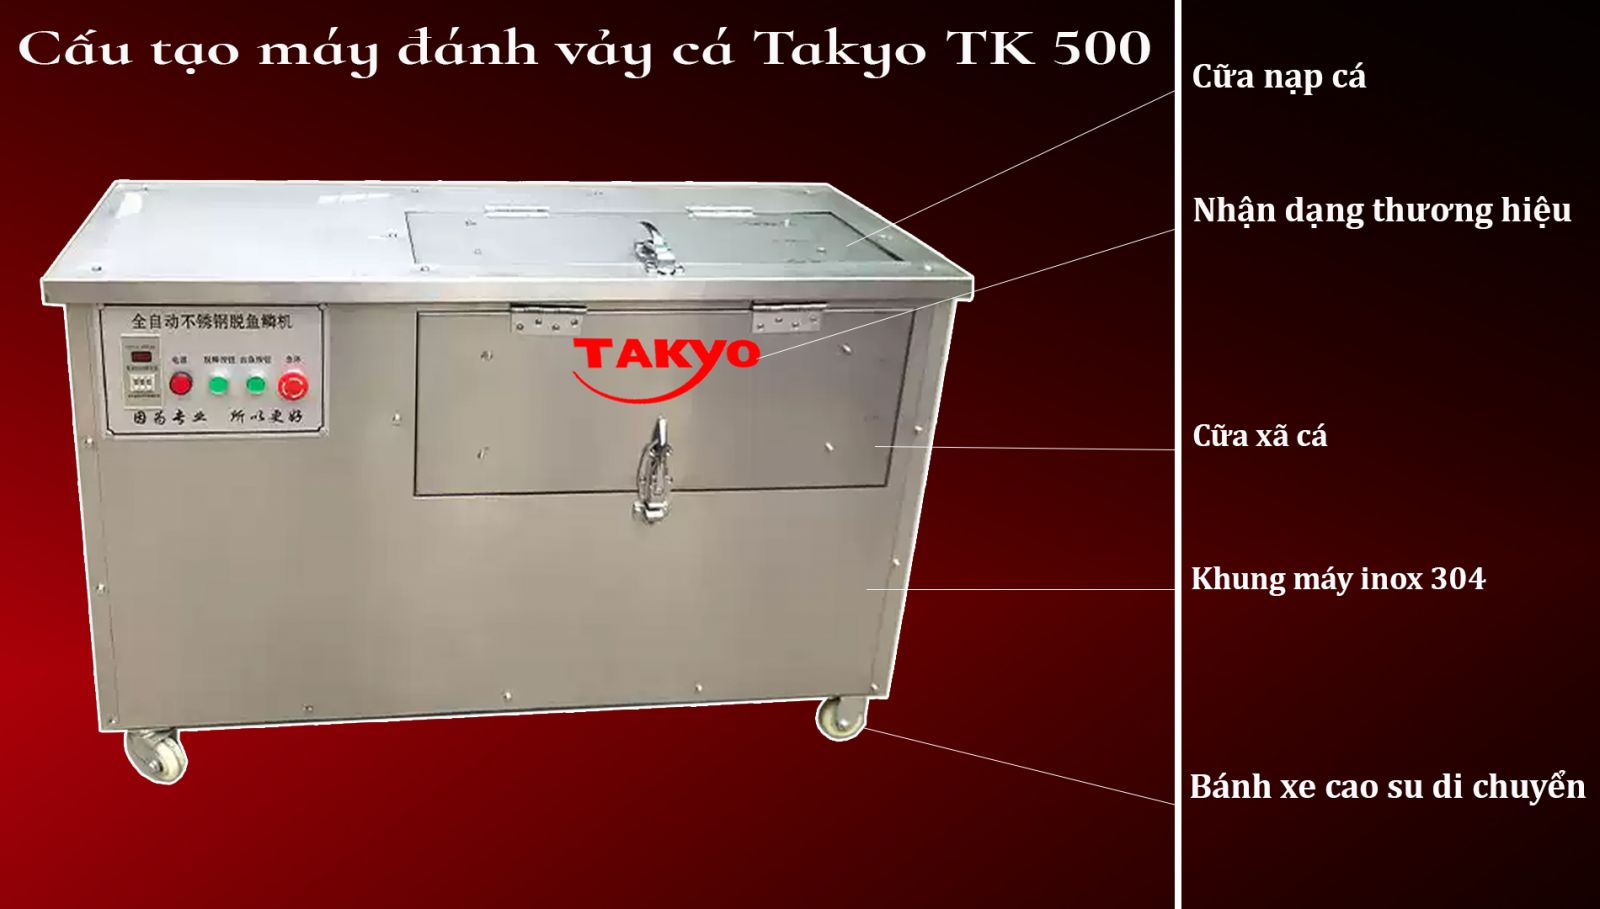 cau-tao-may-danh-vay-ca-loc-TAKYO-TK500